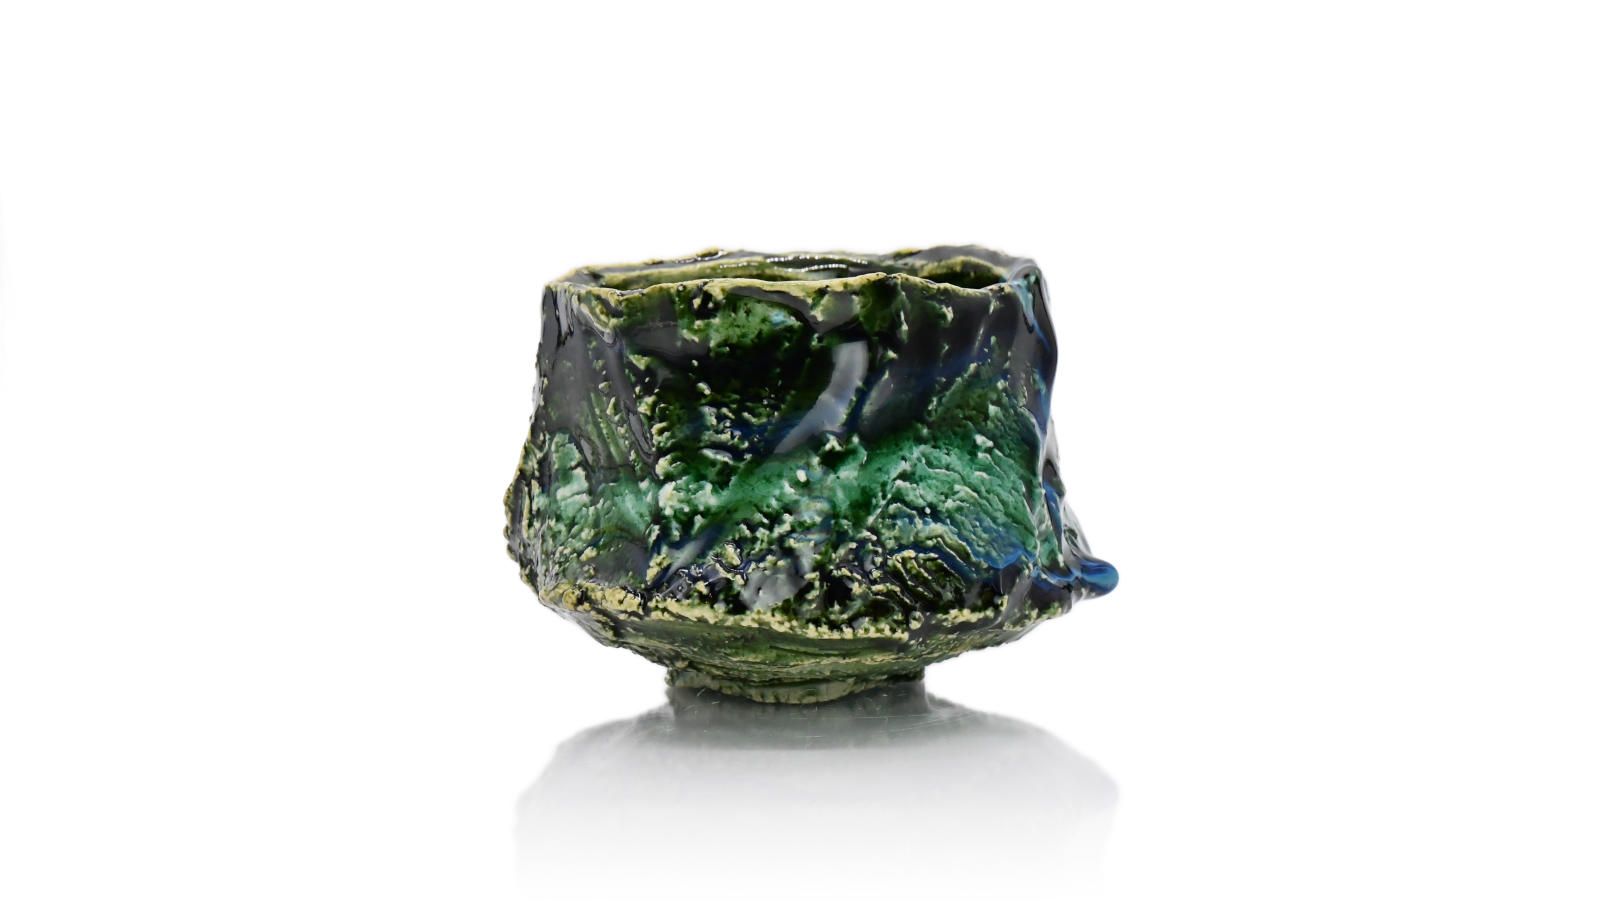 Oribe Chawan (Ceremonial Tea Bowl) by Makoto Yamaguchi | The Stratford ...